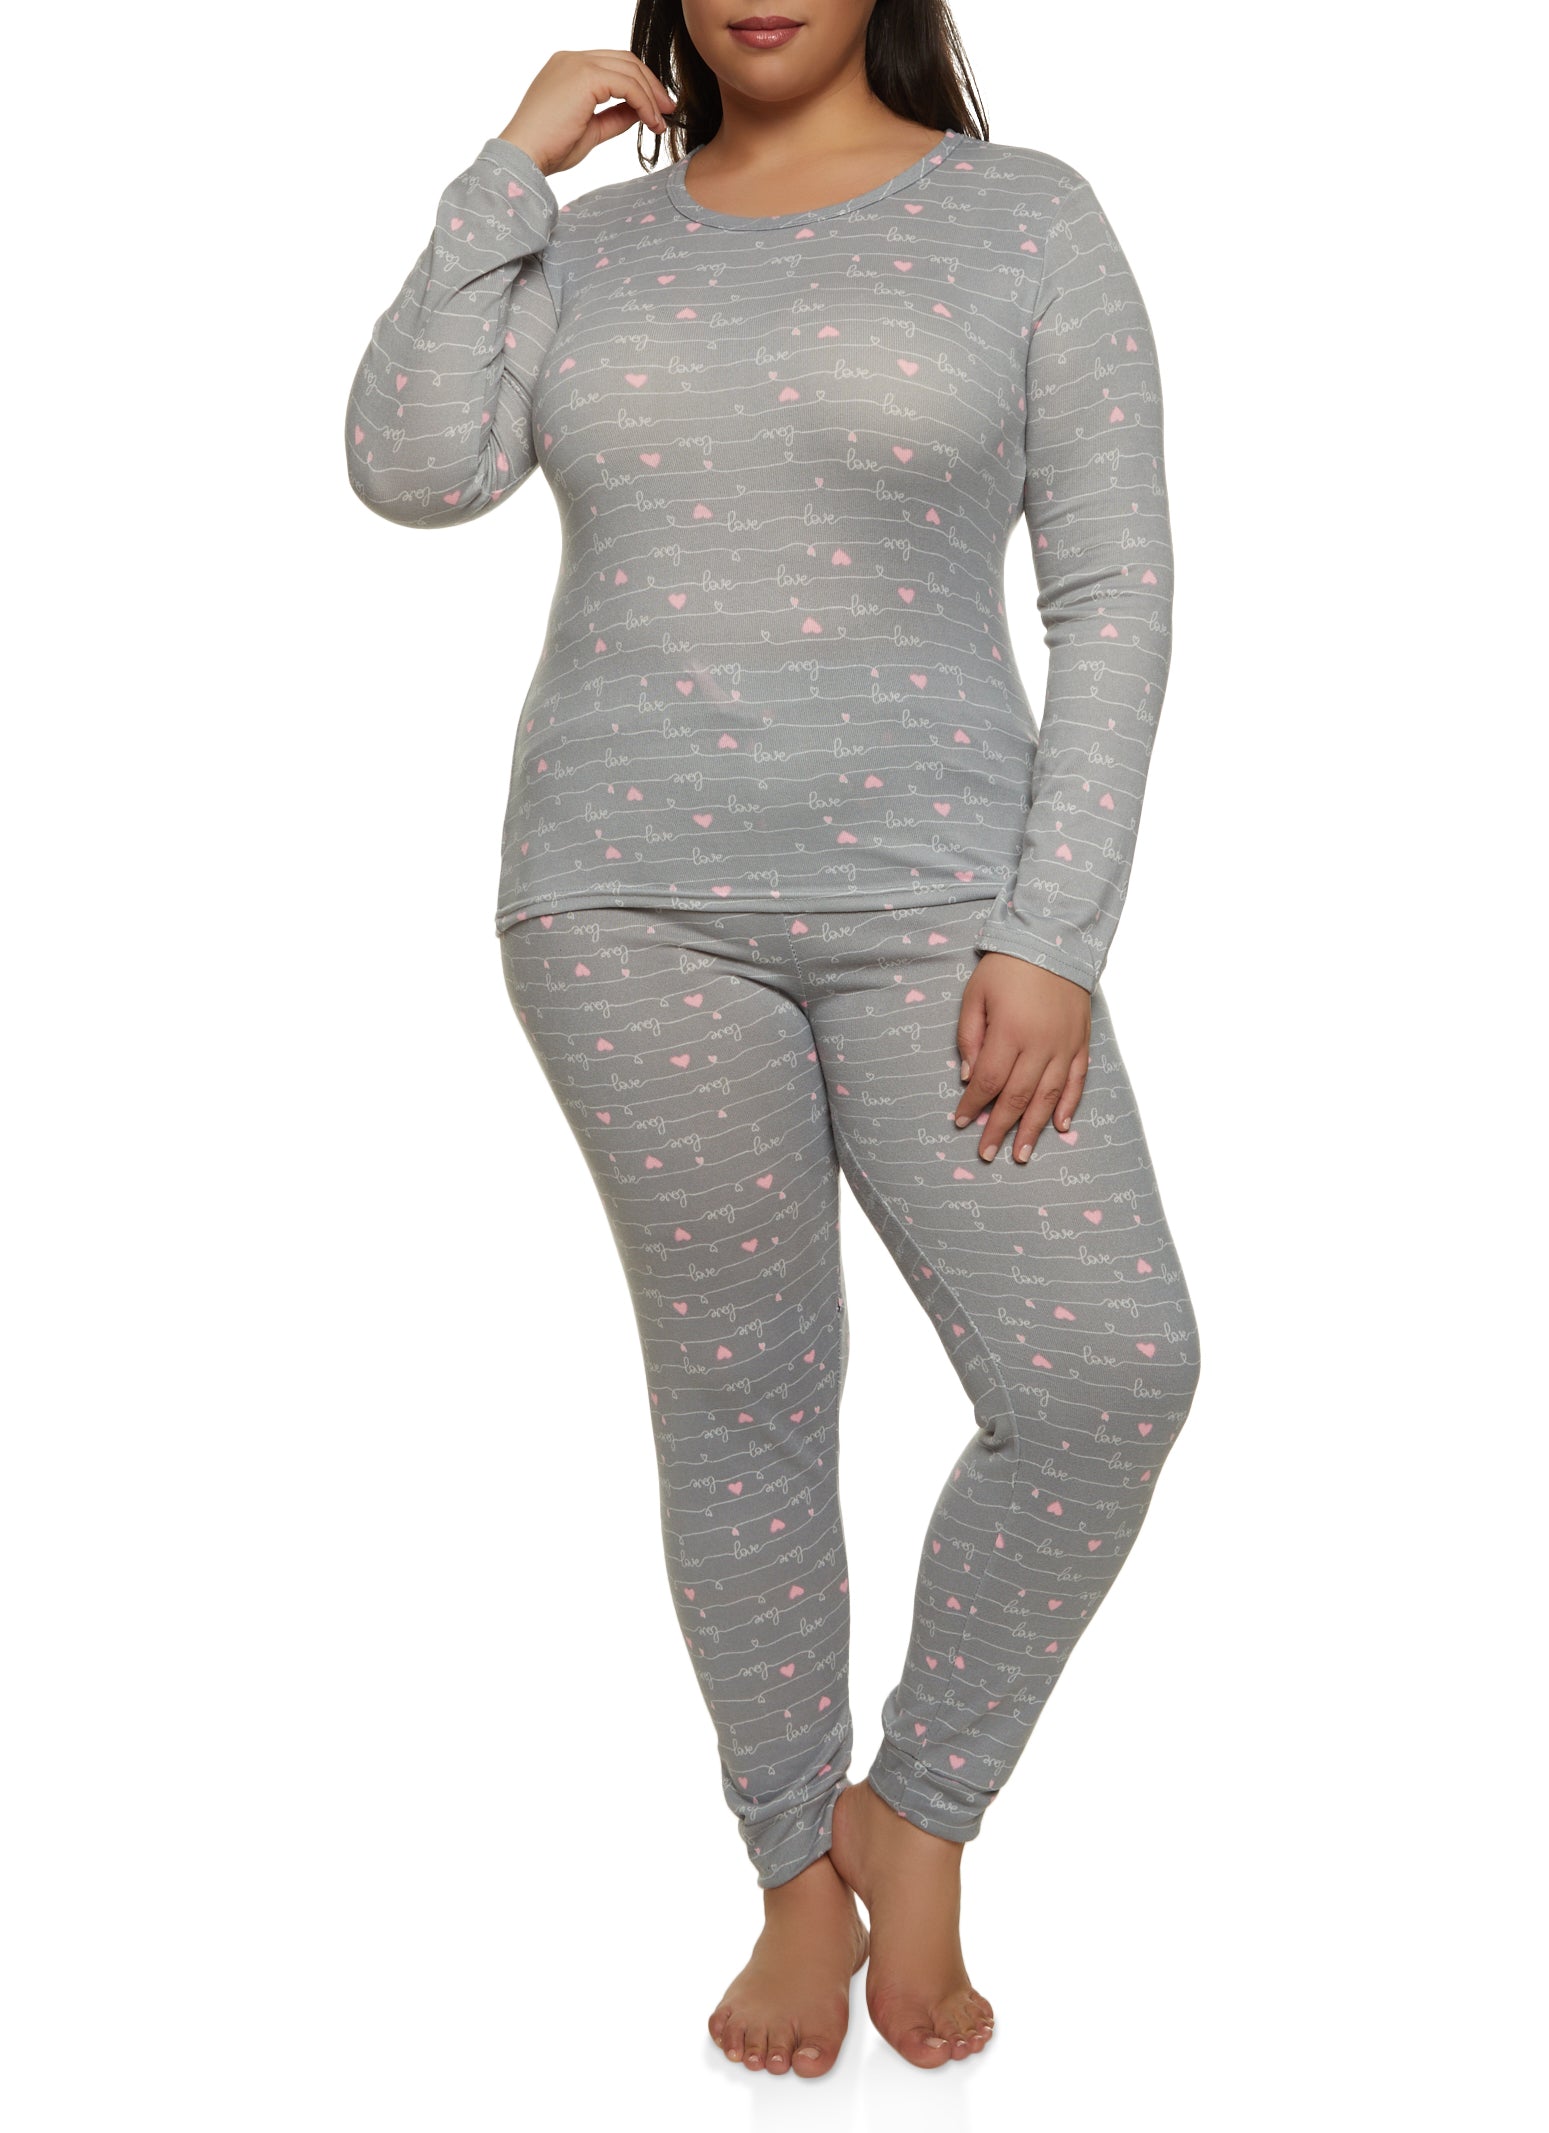 Rainbow Shops Womens Plus Size Love Heartbeat Print Pajama Top and Pants  Set, Grey, Size 3X